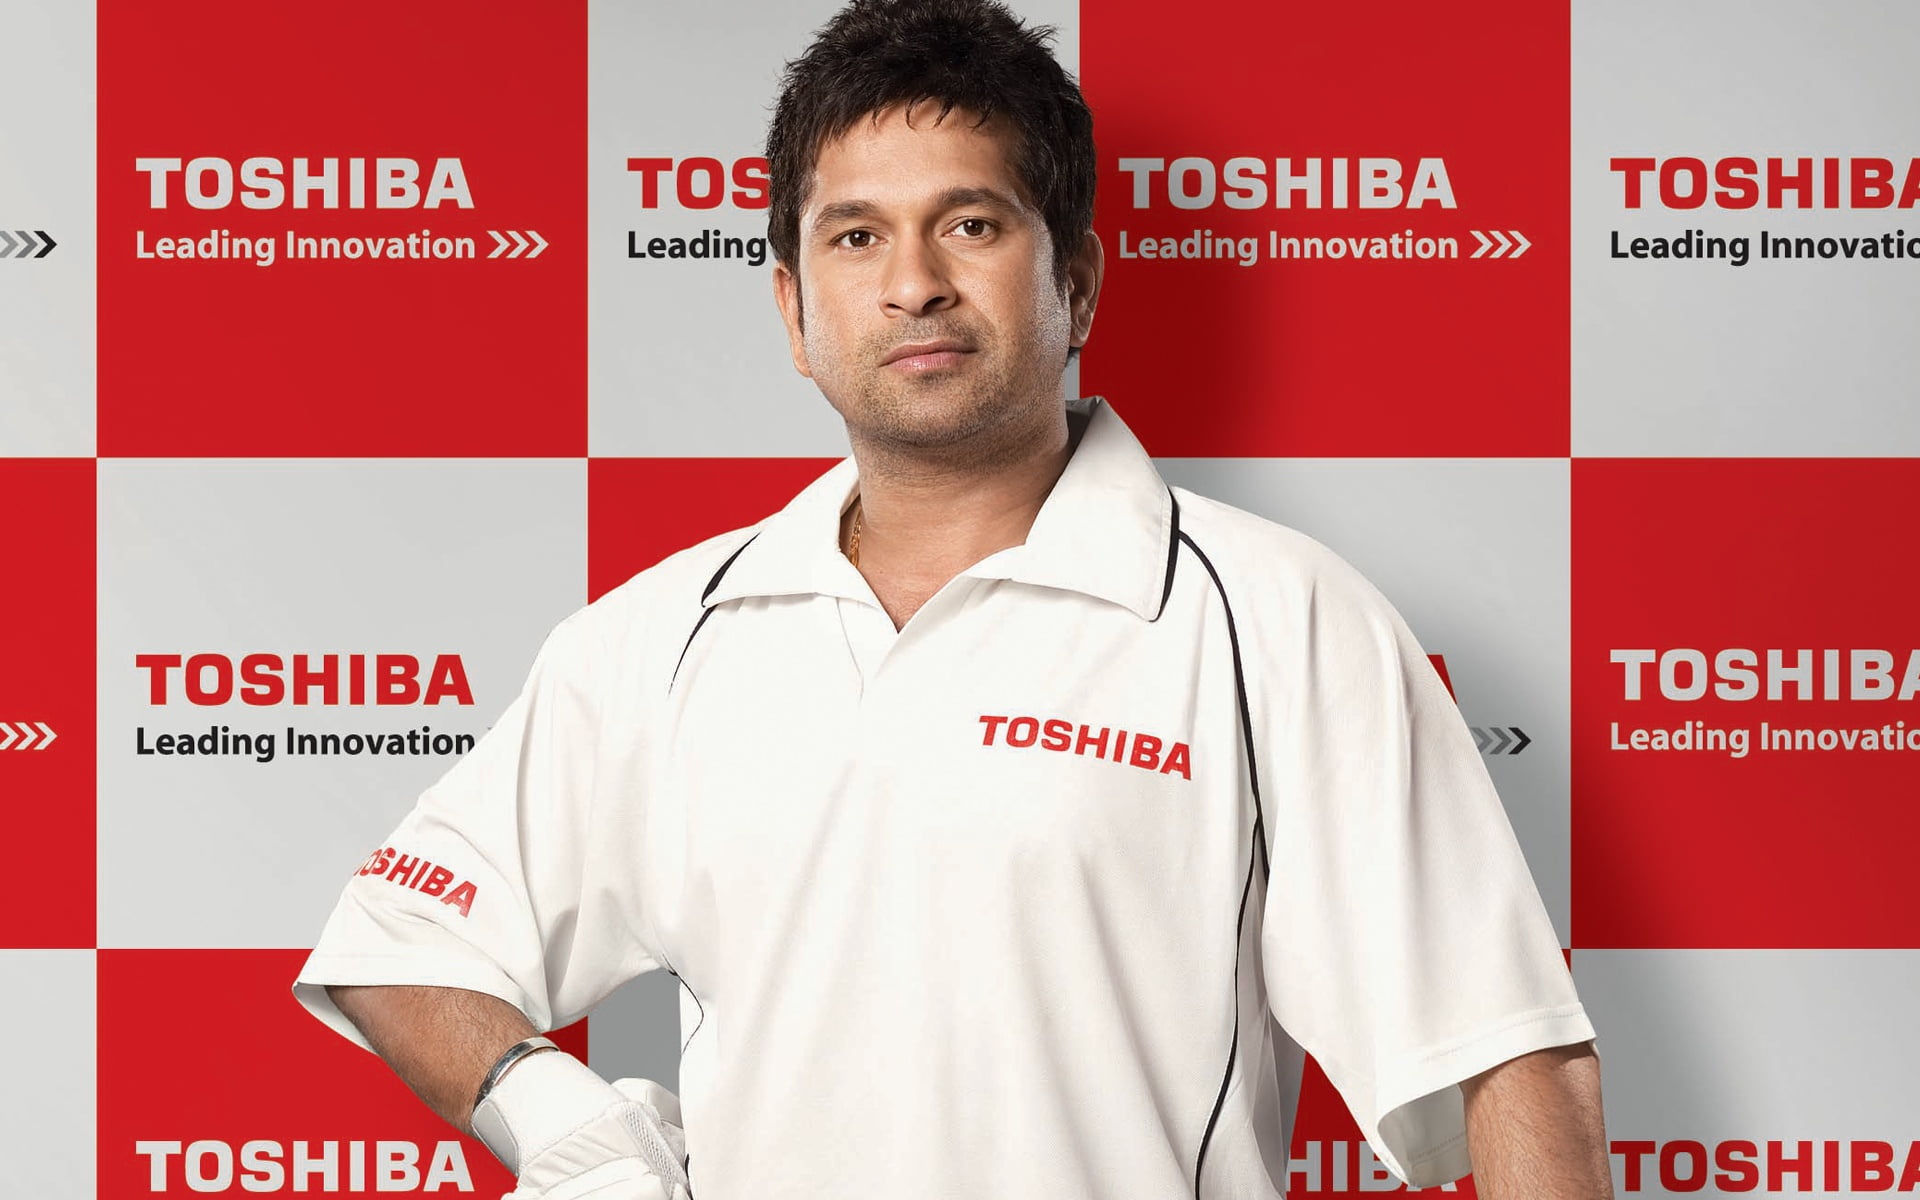 Sachin Tendulkar The King Of Cricket, men's black and white Toshiba polo shirt